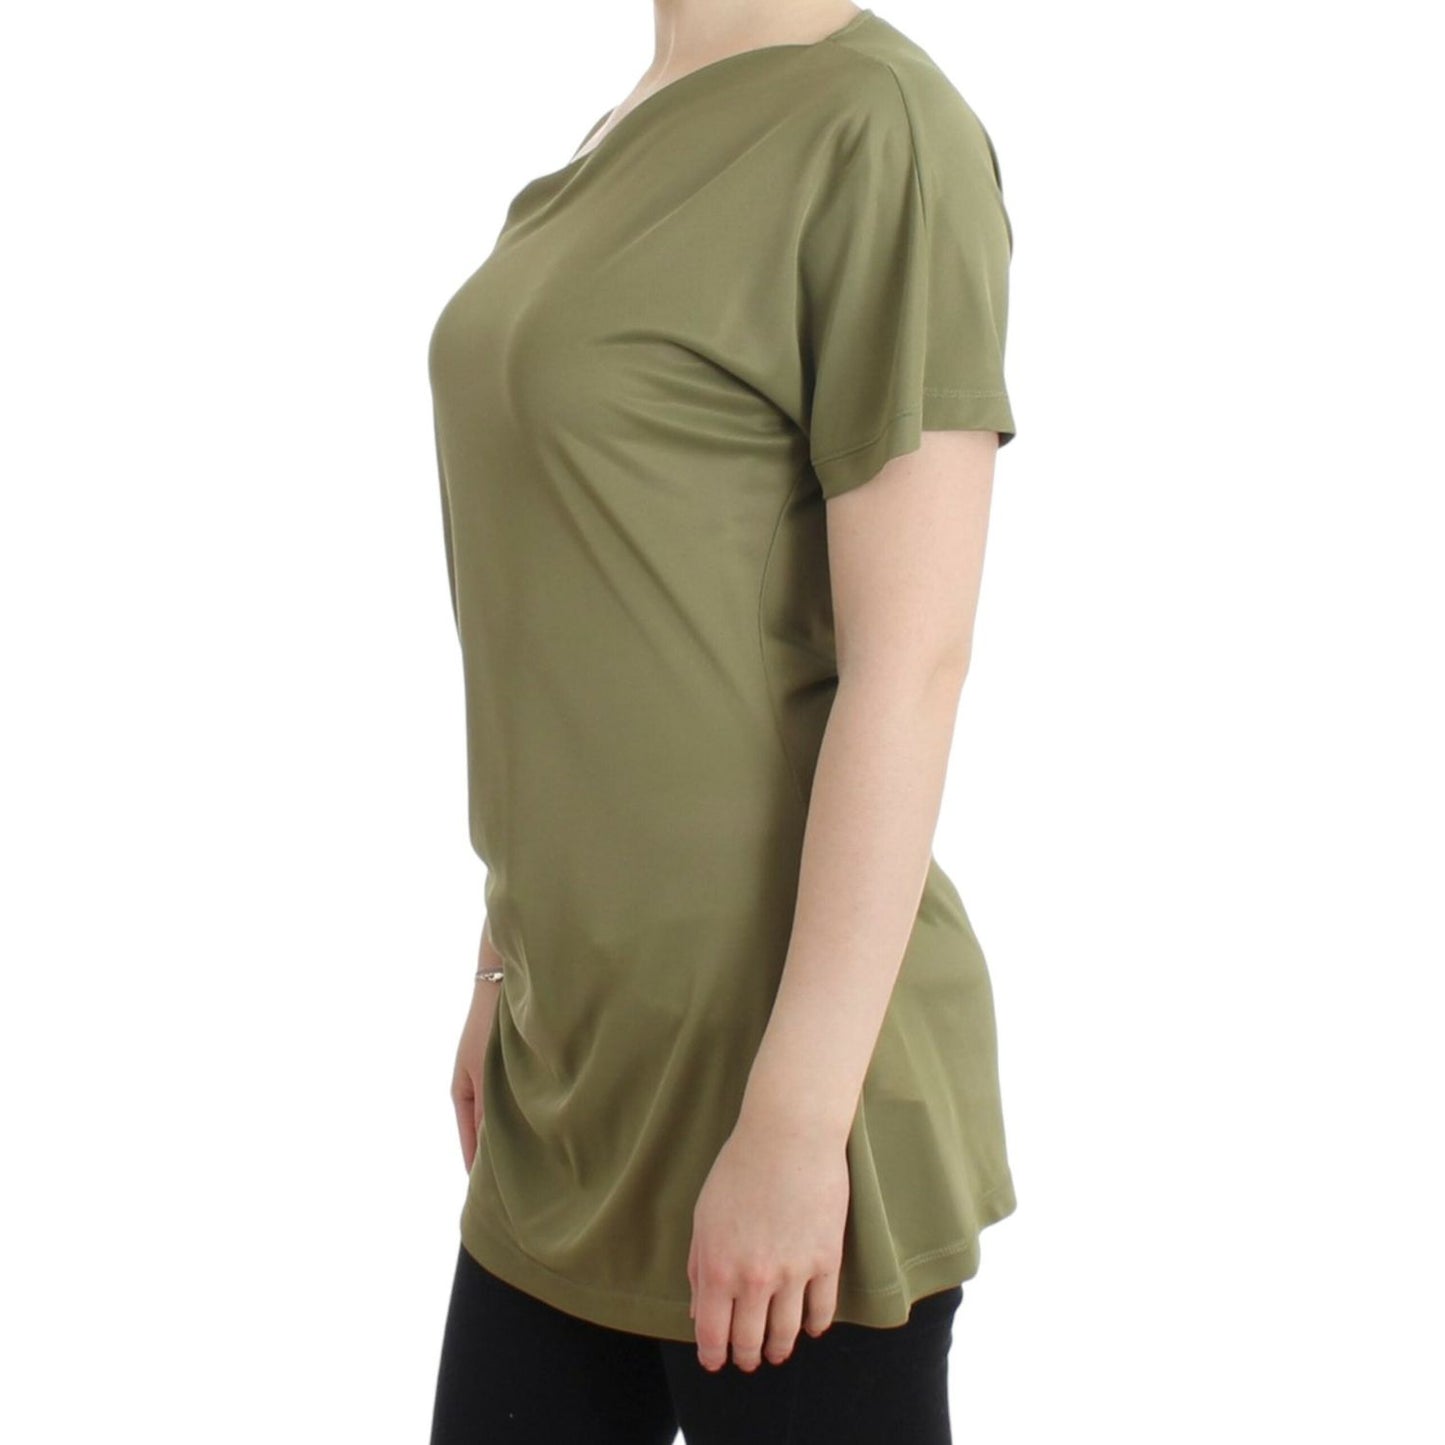 Cavalli Elegant Green Jersey Blouse with Gold Accents green-blouse-top 9527-green-blouse-top-1-scaled-5e8bfaf8-238.jpg